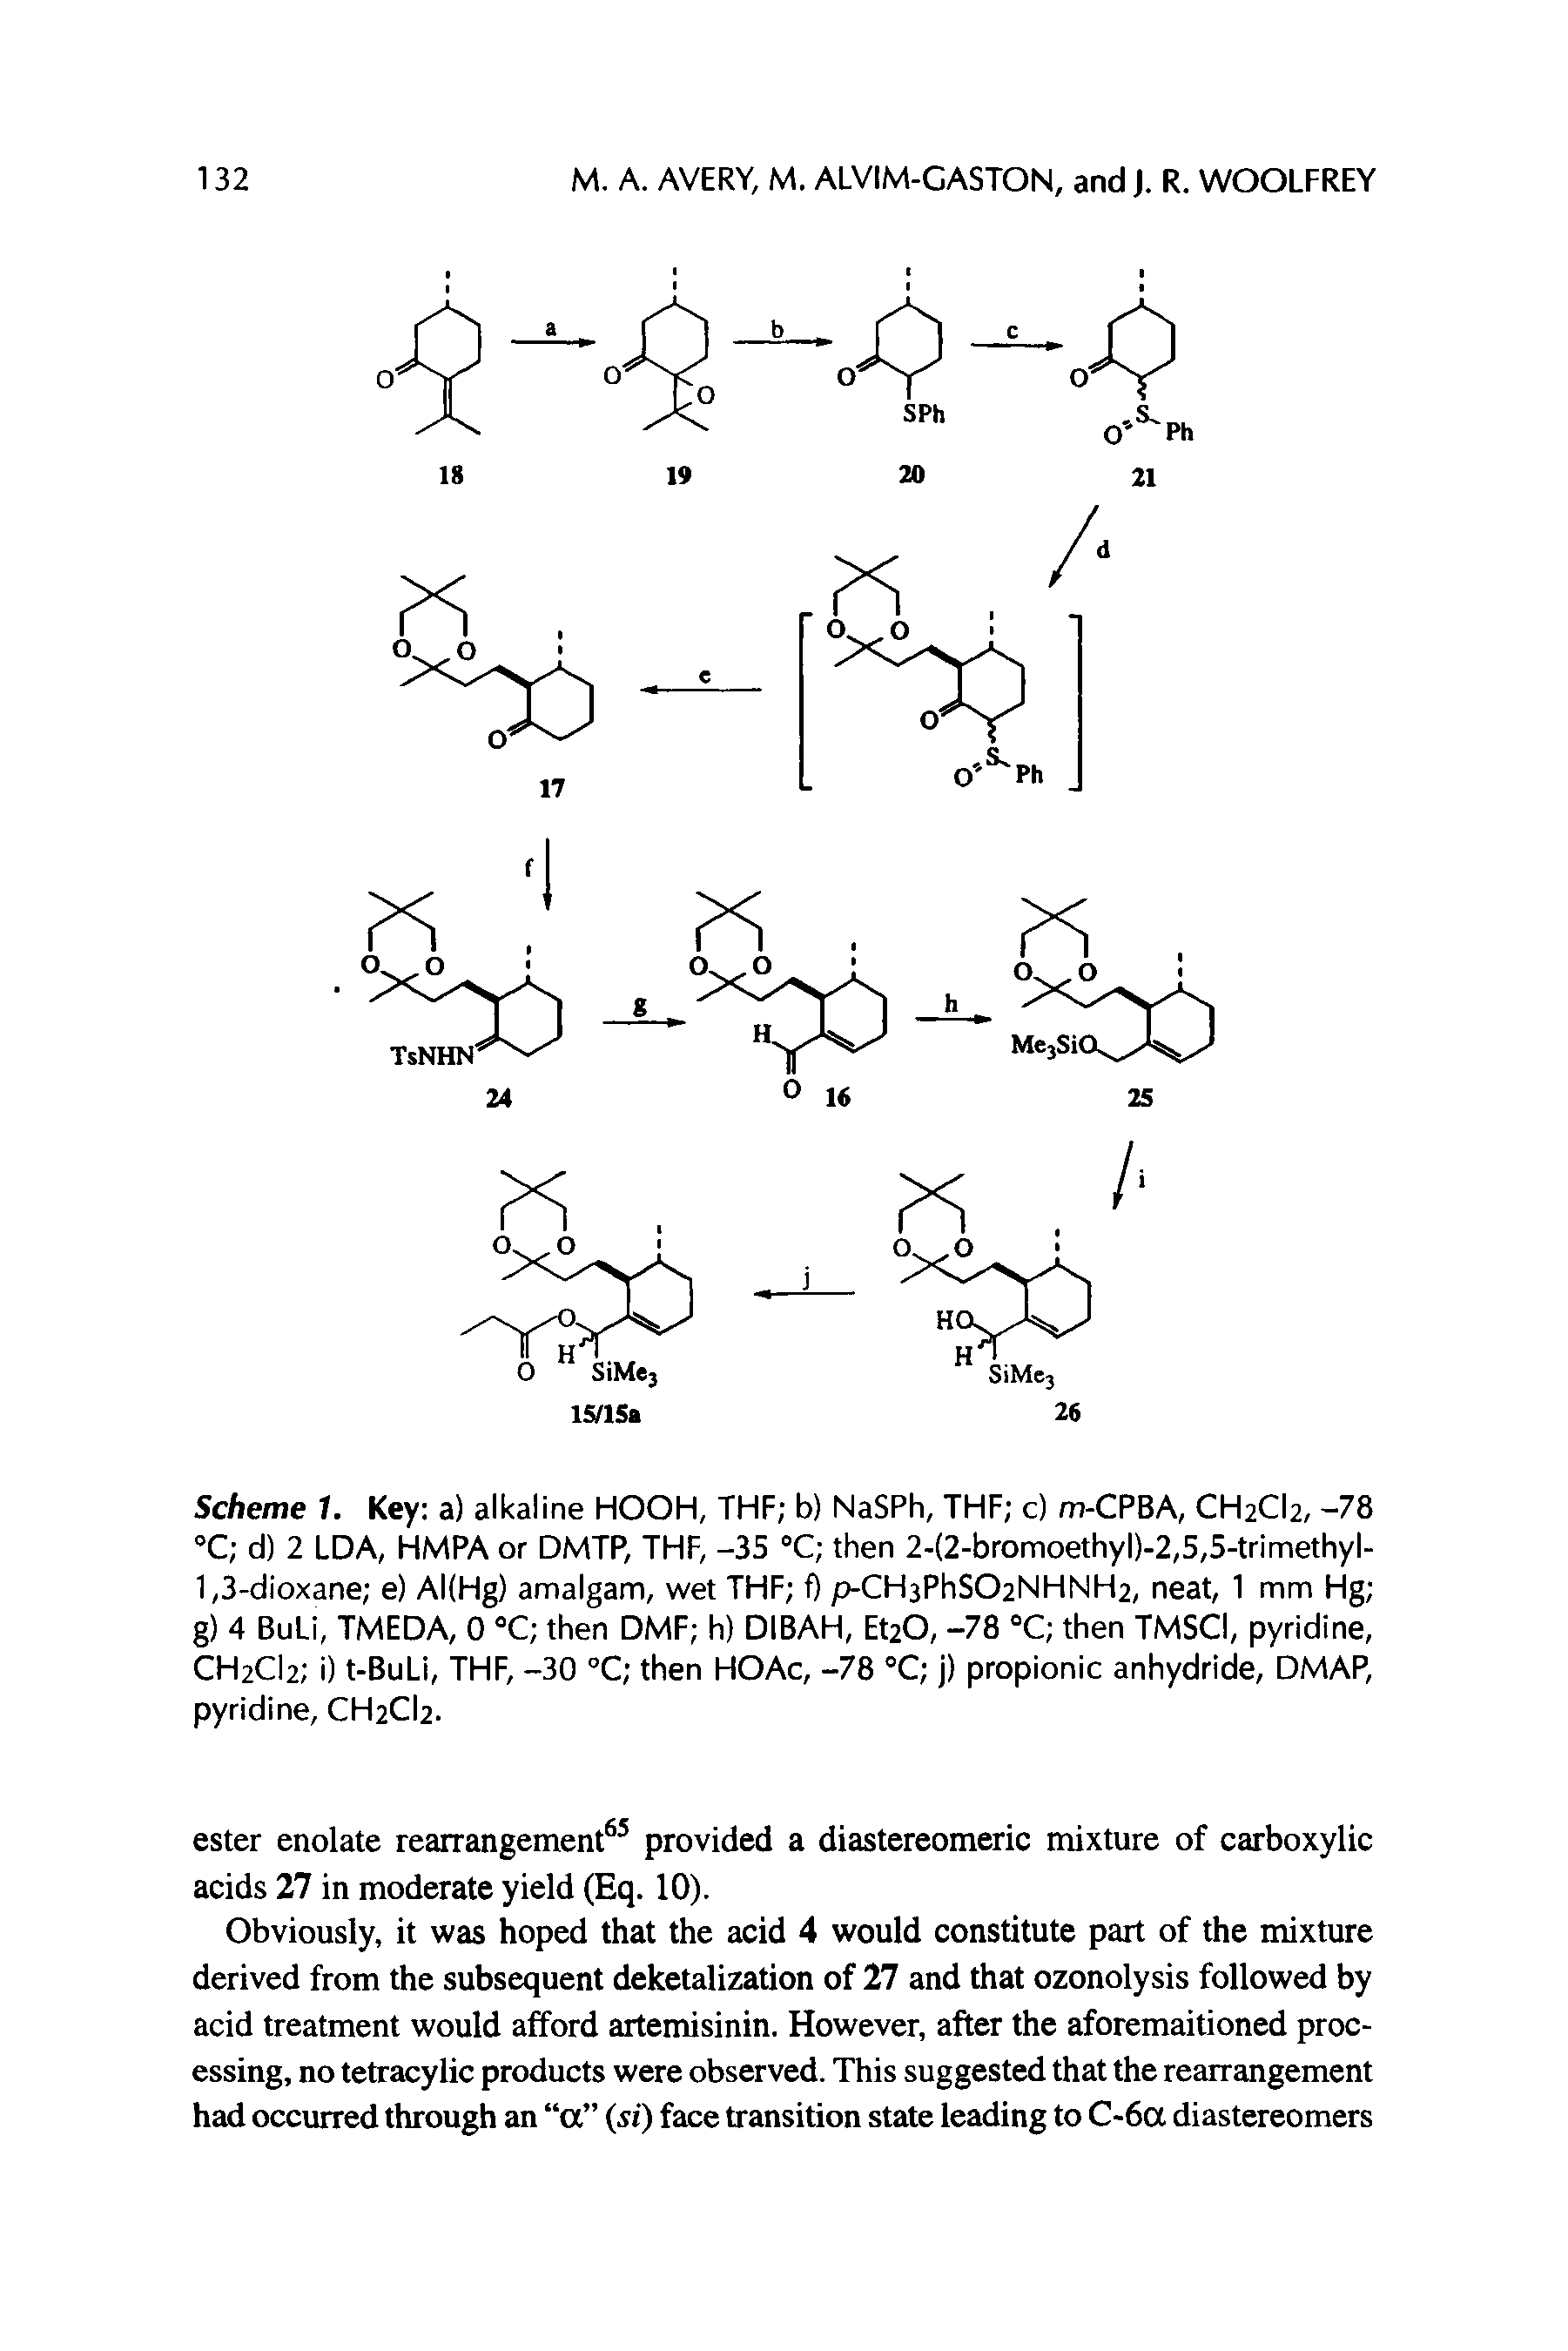 Scheme 1. Key a) alkaline HOOH, THF b) NaSPh, THF c) m-CPBA, CH2CI2, -78 °C d) 2 LDA, HMPA or DMTP, THF, -35 °C then 2-(2-bromoethyl)-2,5,5-trimethyl-1,3-dioxane e) AI(Hg) amalgam, wet THF f) p-CH3PhS02NHNH2, neat, 1 mm Hg g) 4 BuLi, TMEDA, 0 °C then DMF h) DIBAH, Et20, -78 °C then TMSCI, pyridine, CH2CI2 i) t-BuLi, THF, -30 °C then HOAc, -78 °C j) propionic anhydride, DMAP, pyridine, CH2CI2.